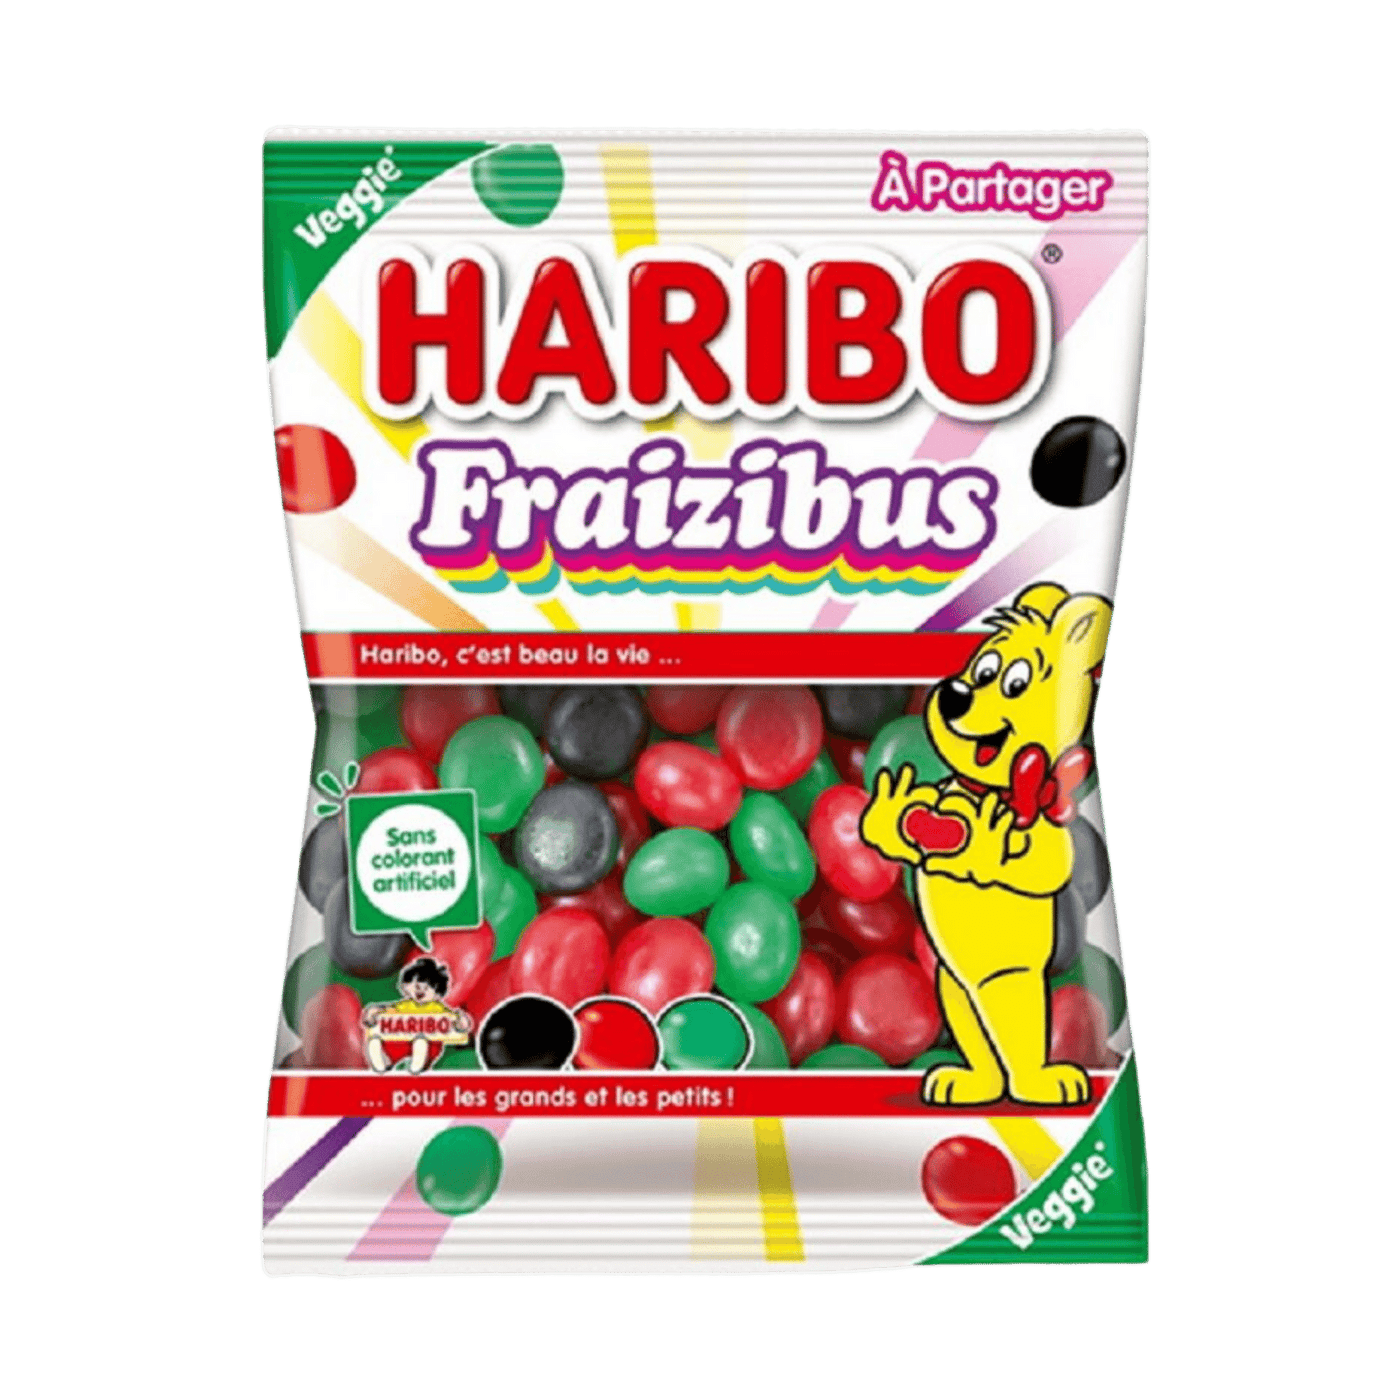 Haribo - Fraizibus - France